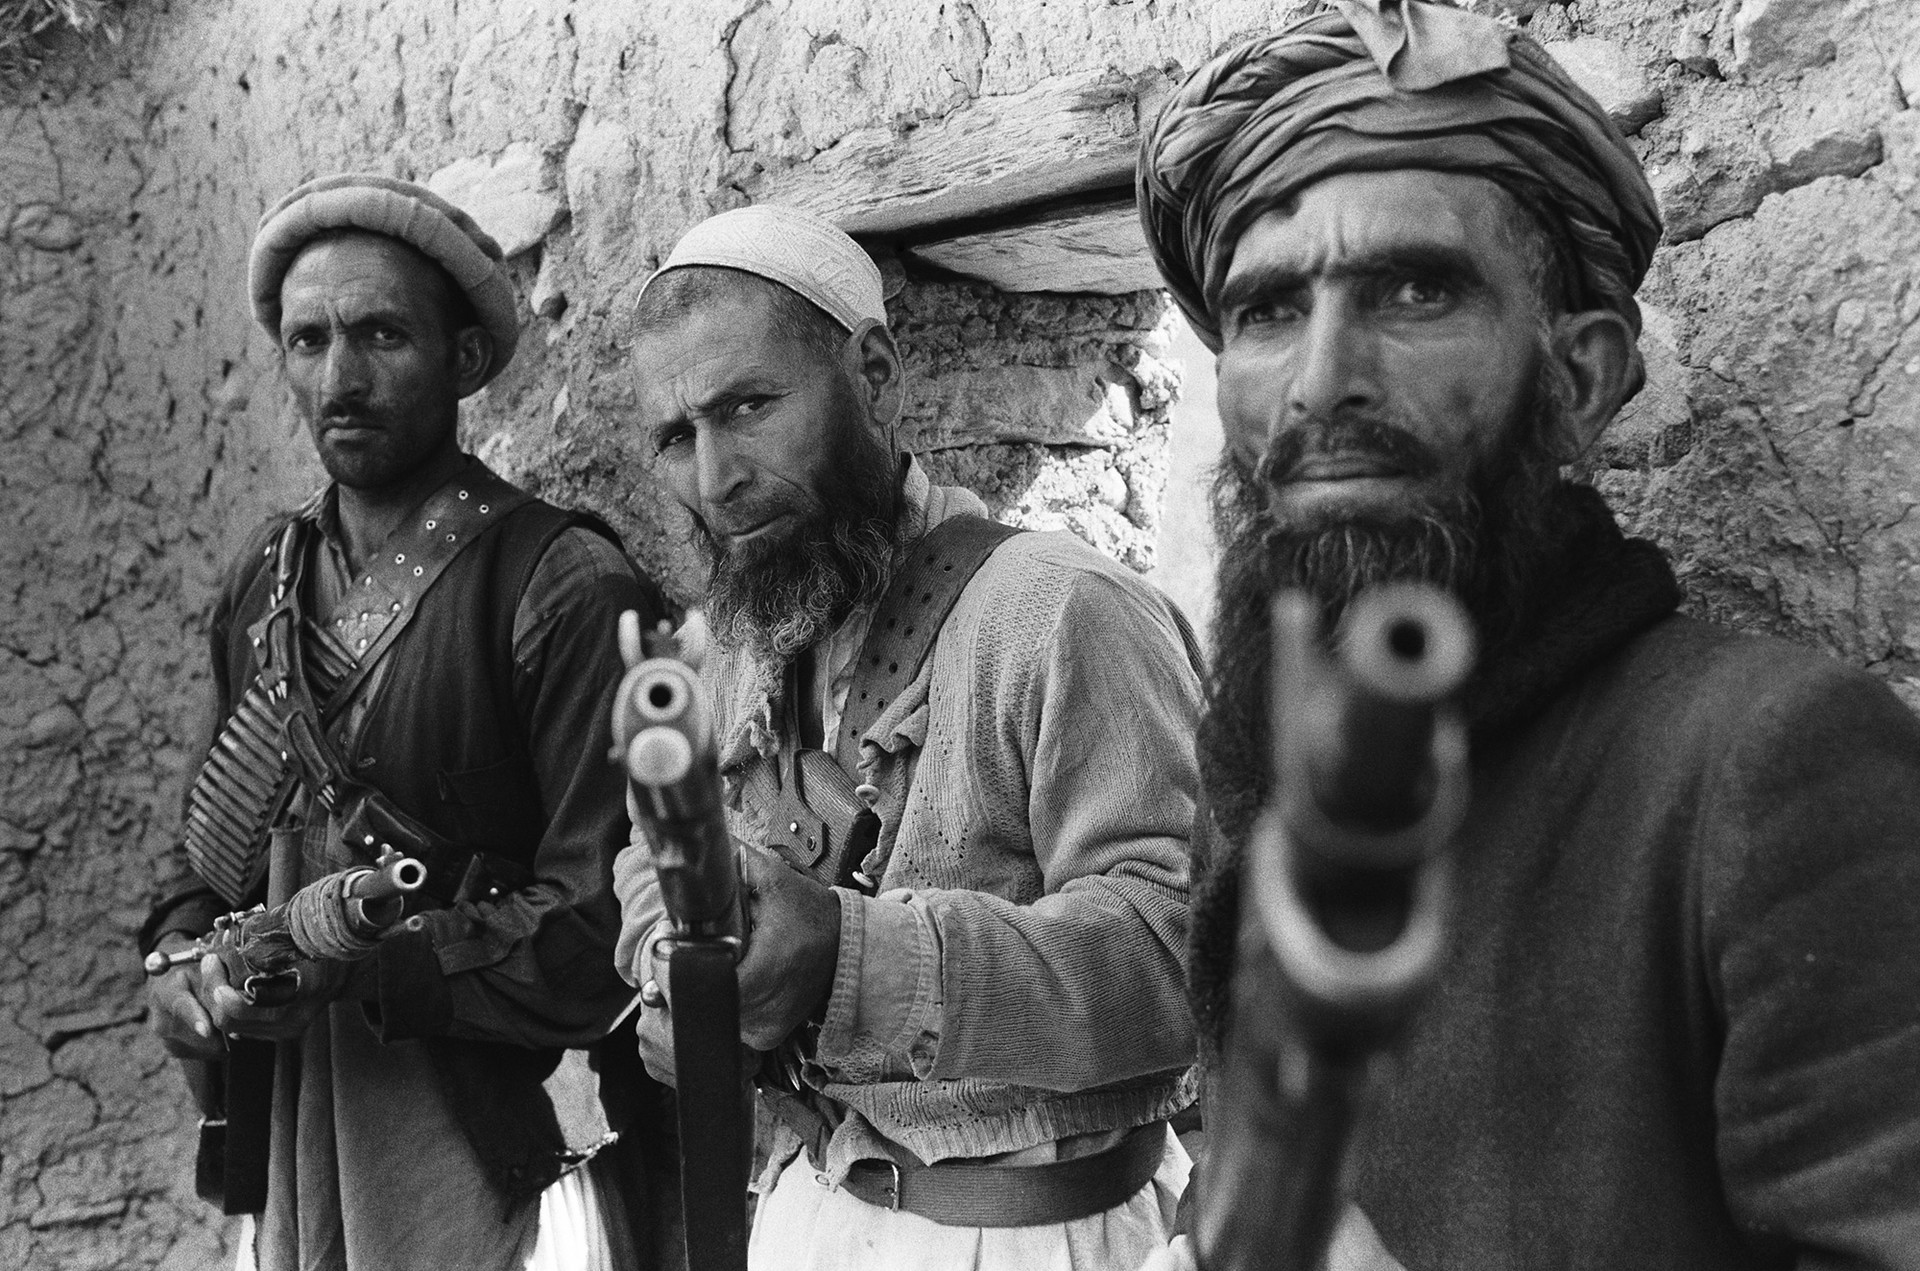 Mujahidin - pejuang Islamis yang menentang Uni Soviet dan pemerintah pro-Soviet pada 1979-1989